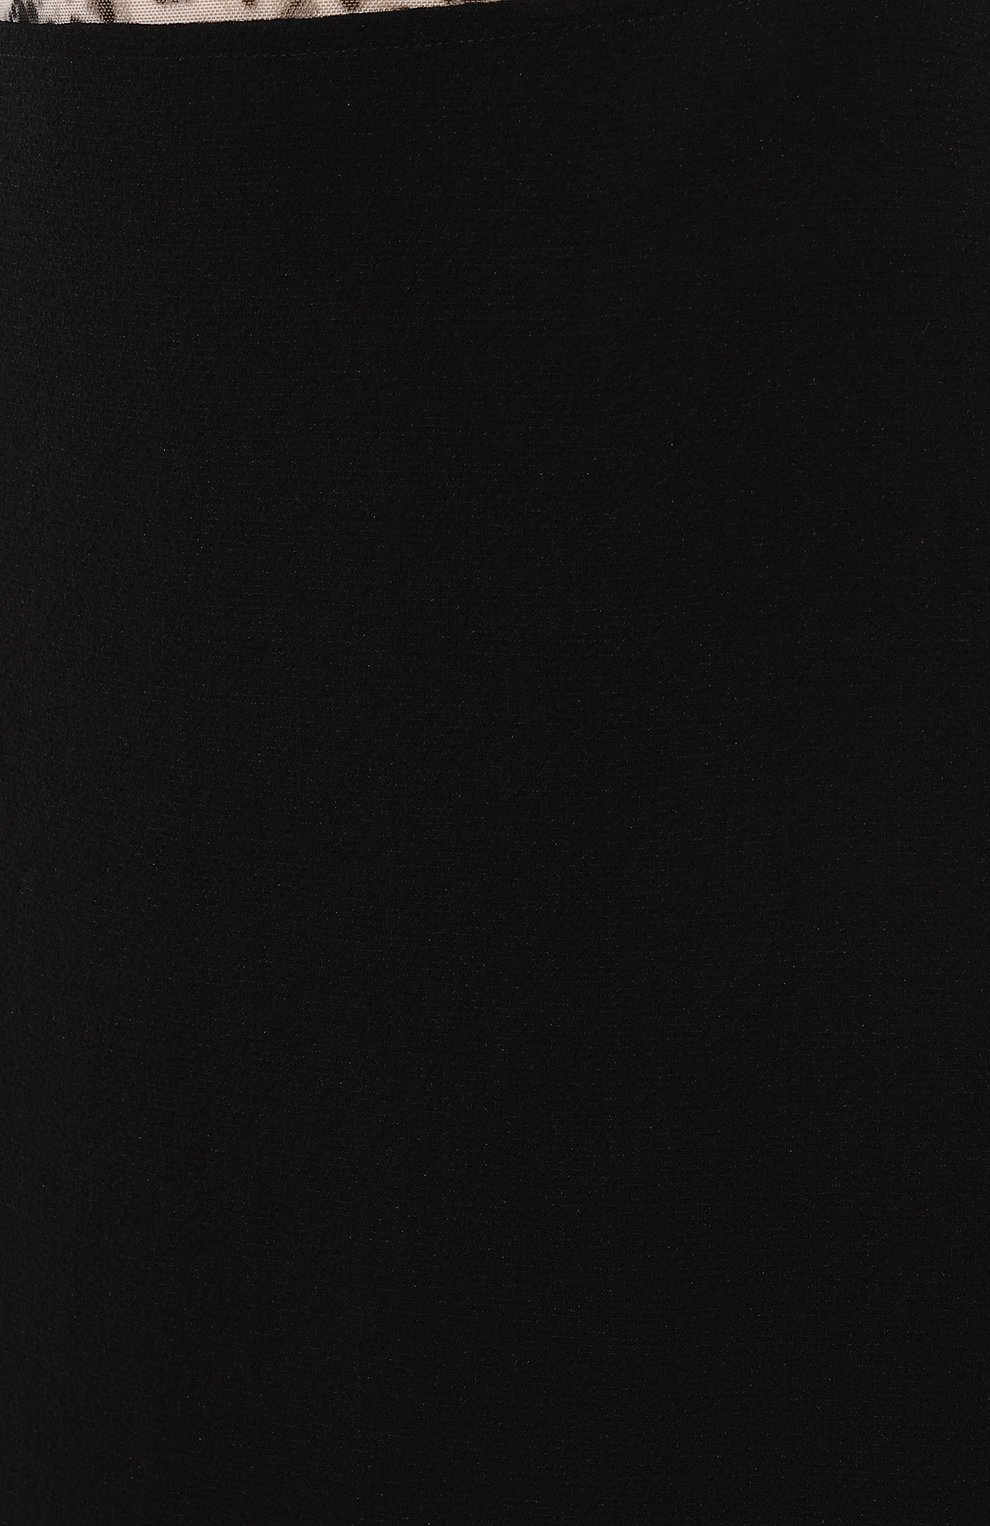 Женская юбка NINA RICCI черного цвета, арт. 23PCJU013PL0341 | Фото 5 (Материал внешний: Синтетический материал; Женское Кросс-КТ: Юбка-одежда; Длина Ж (юбки, платья, шорты): Макси; Материал подклада: Вискоза; Стили: Кэжуэл)